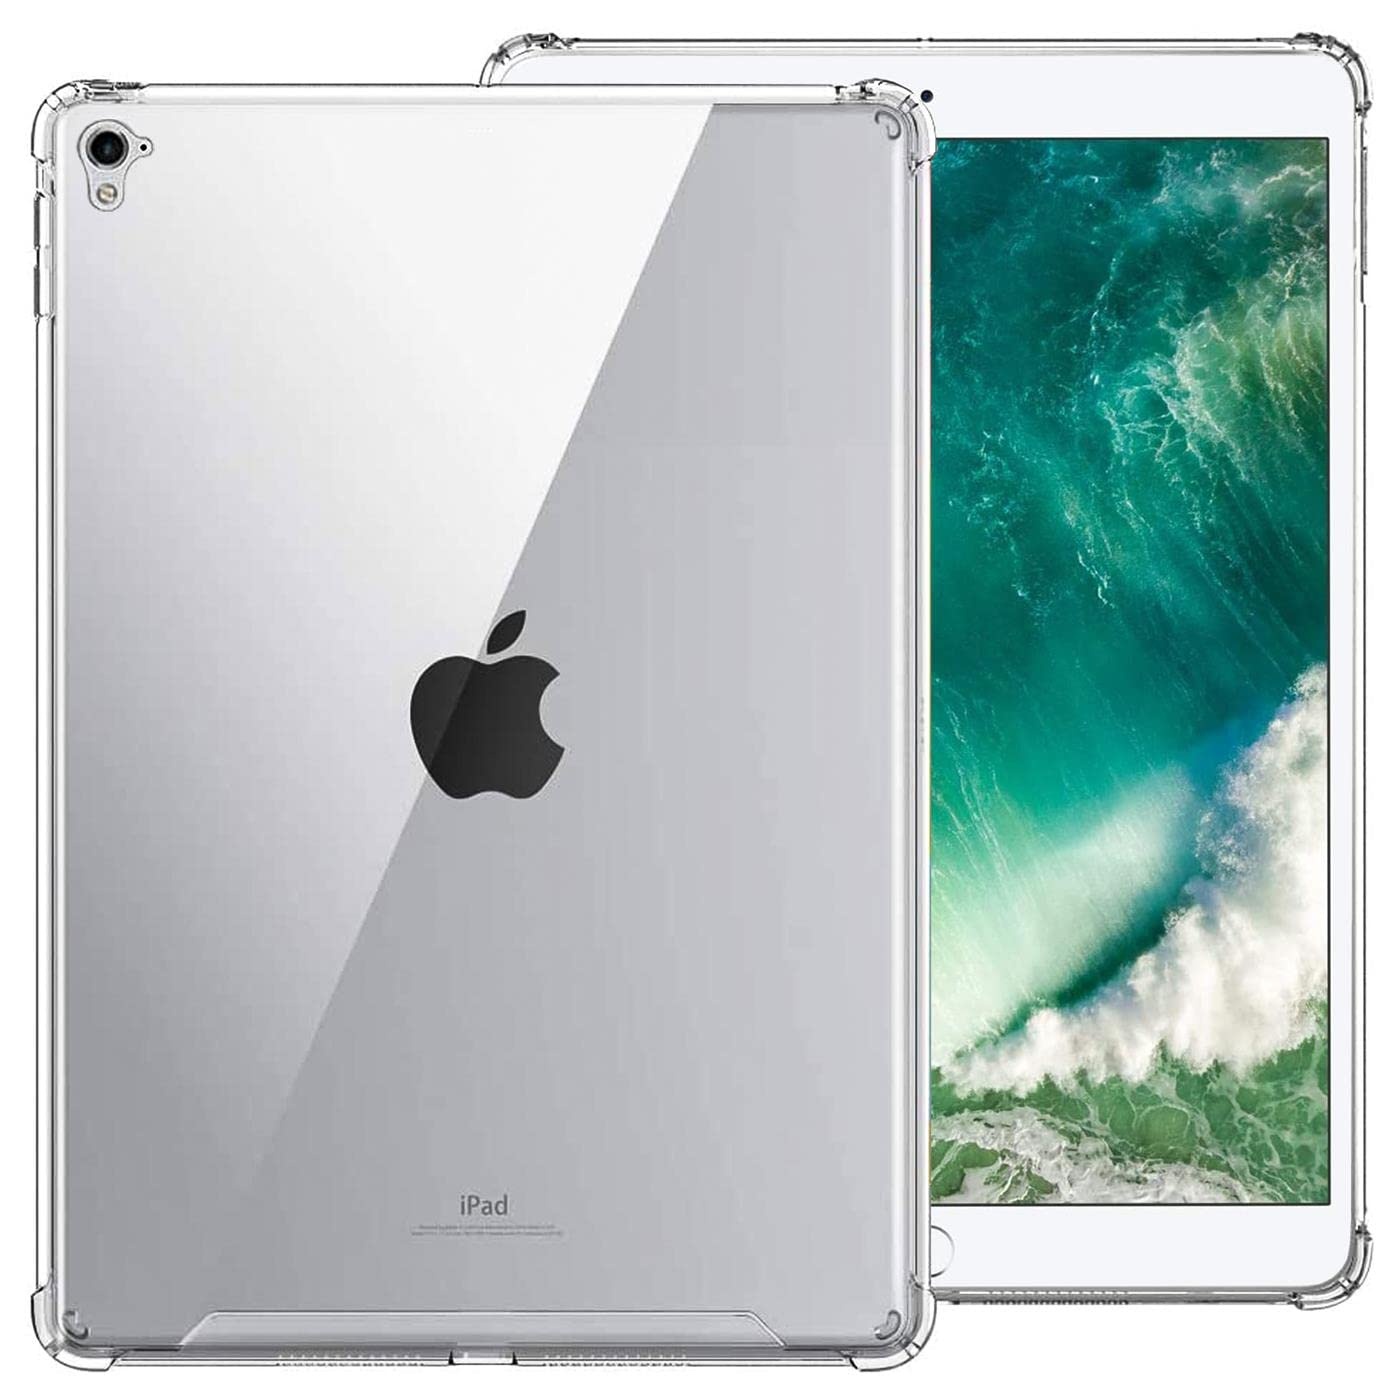 Verco ultraleichte Tablet-Hülle für iPad Pro 9.7 Zoll, Robustes Case verstärkter Kantenschutz Schutzhülle für Apple iPad Pro 9.7 Hülle Transparent